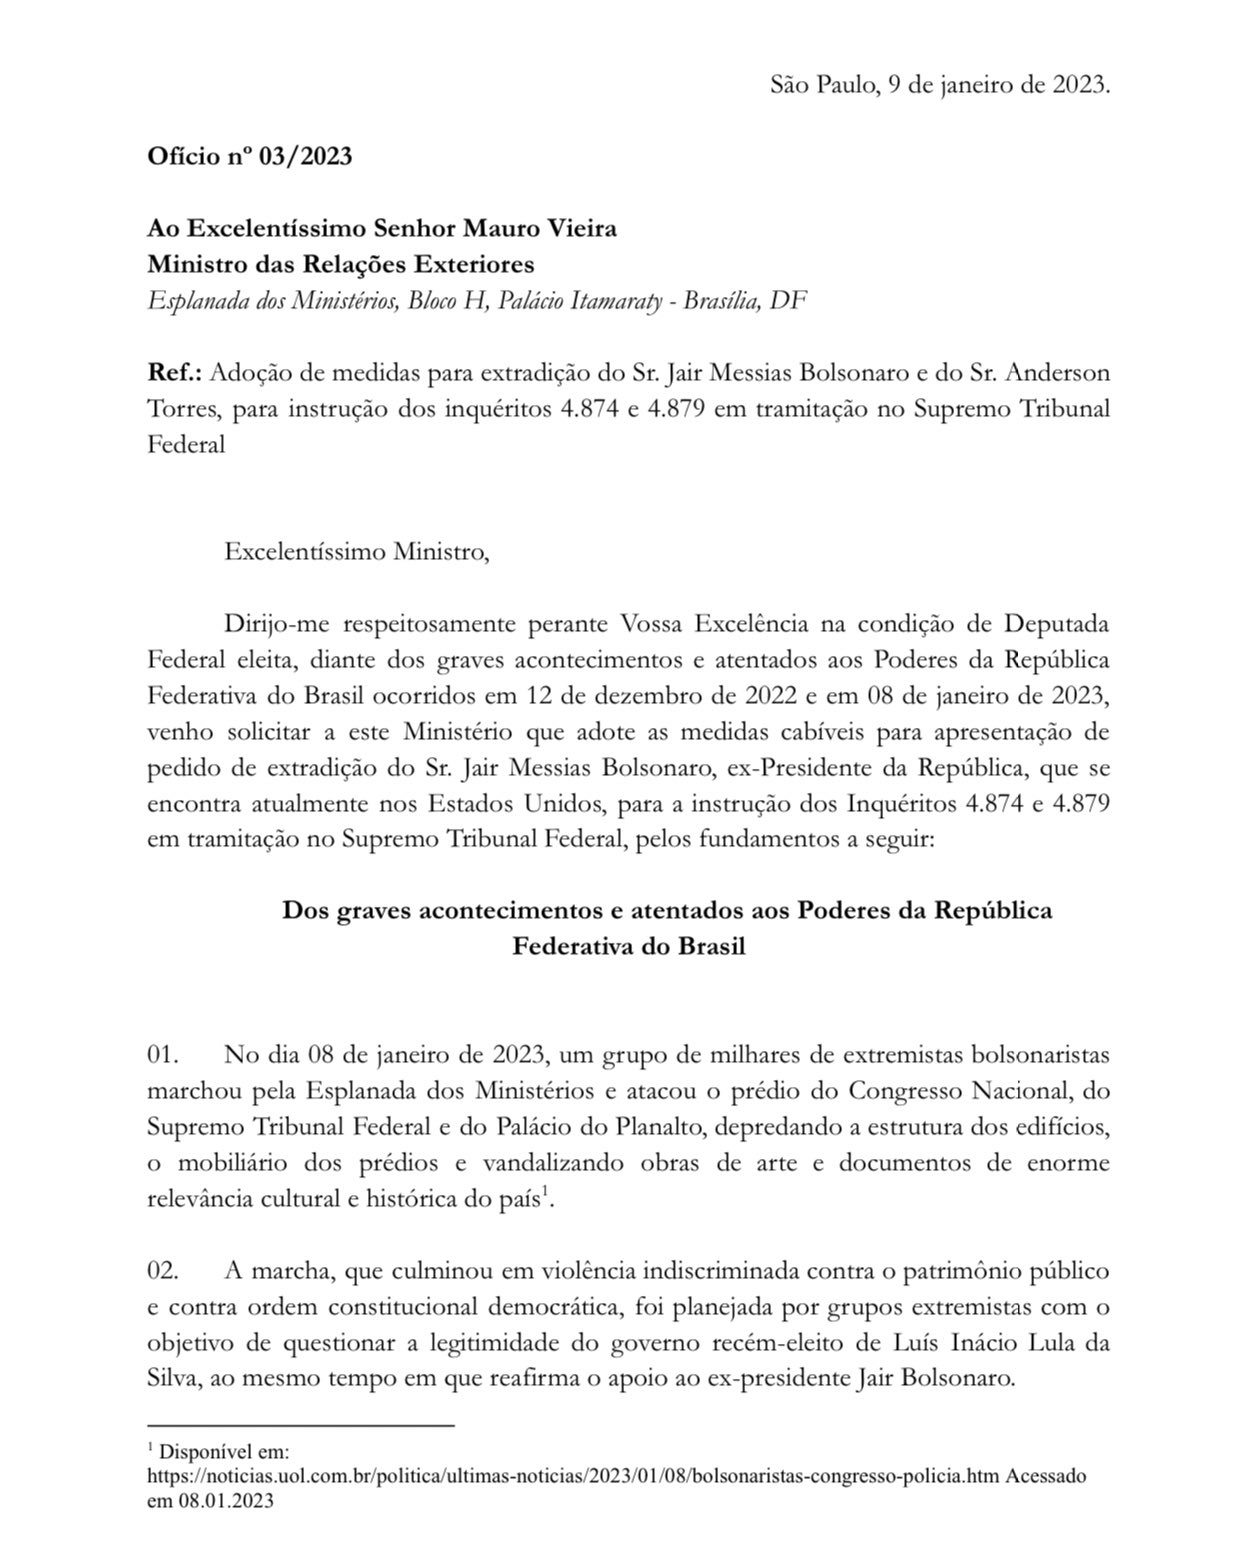 Erika Hilton's letter asking for Bolsonaro's extradition